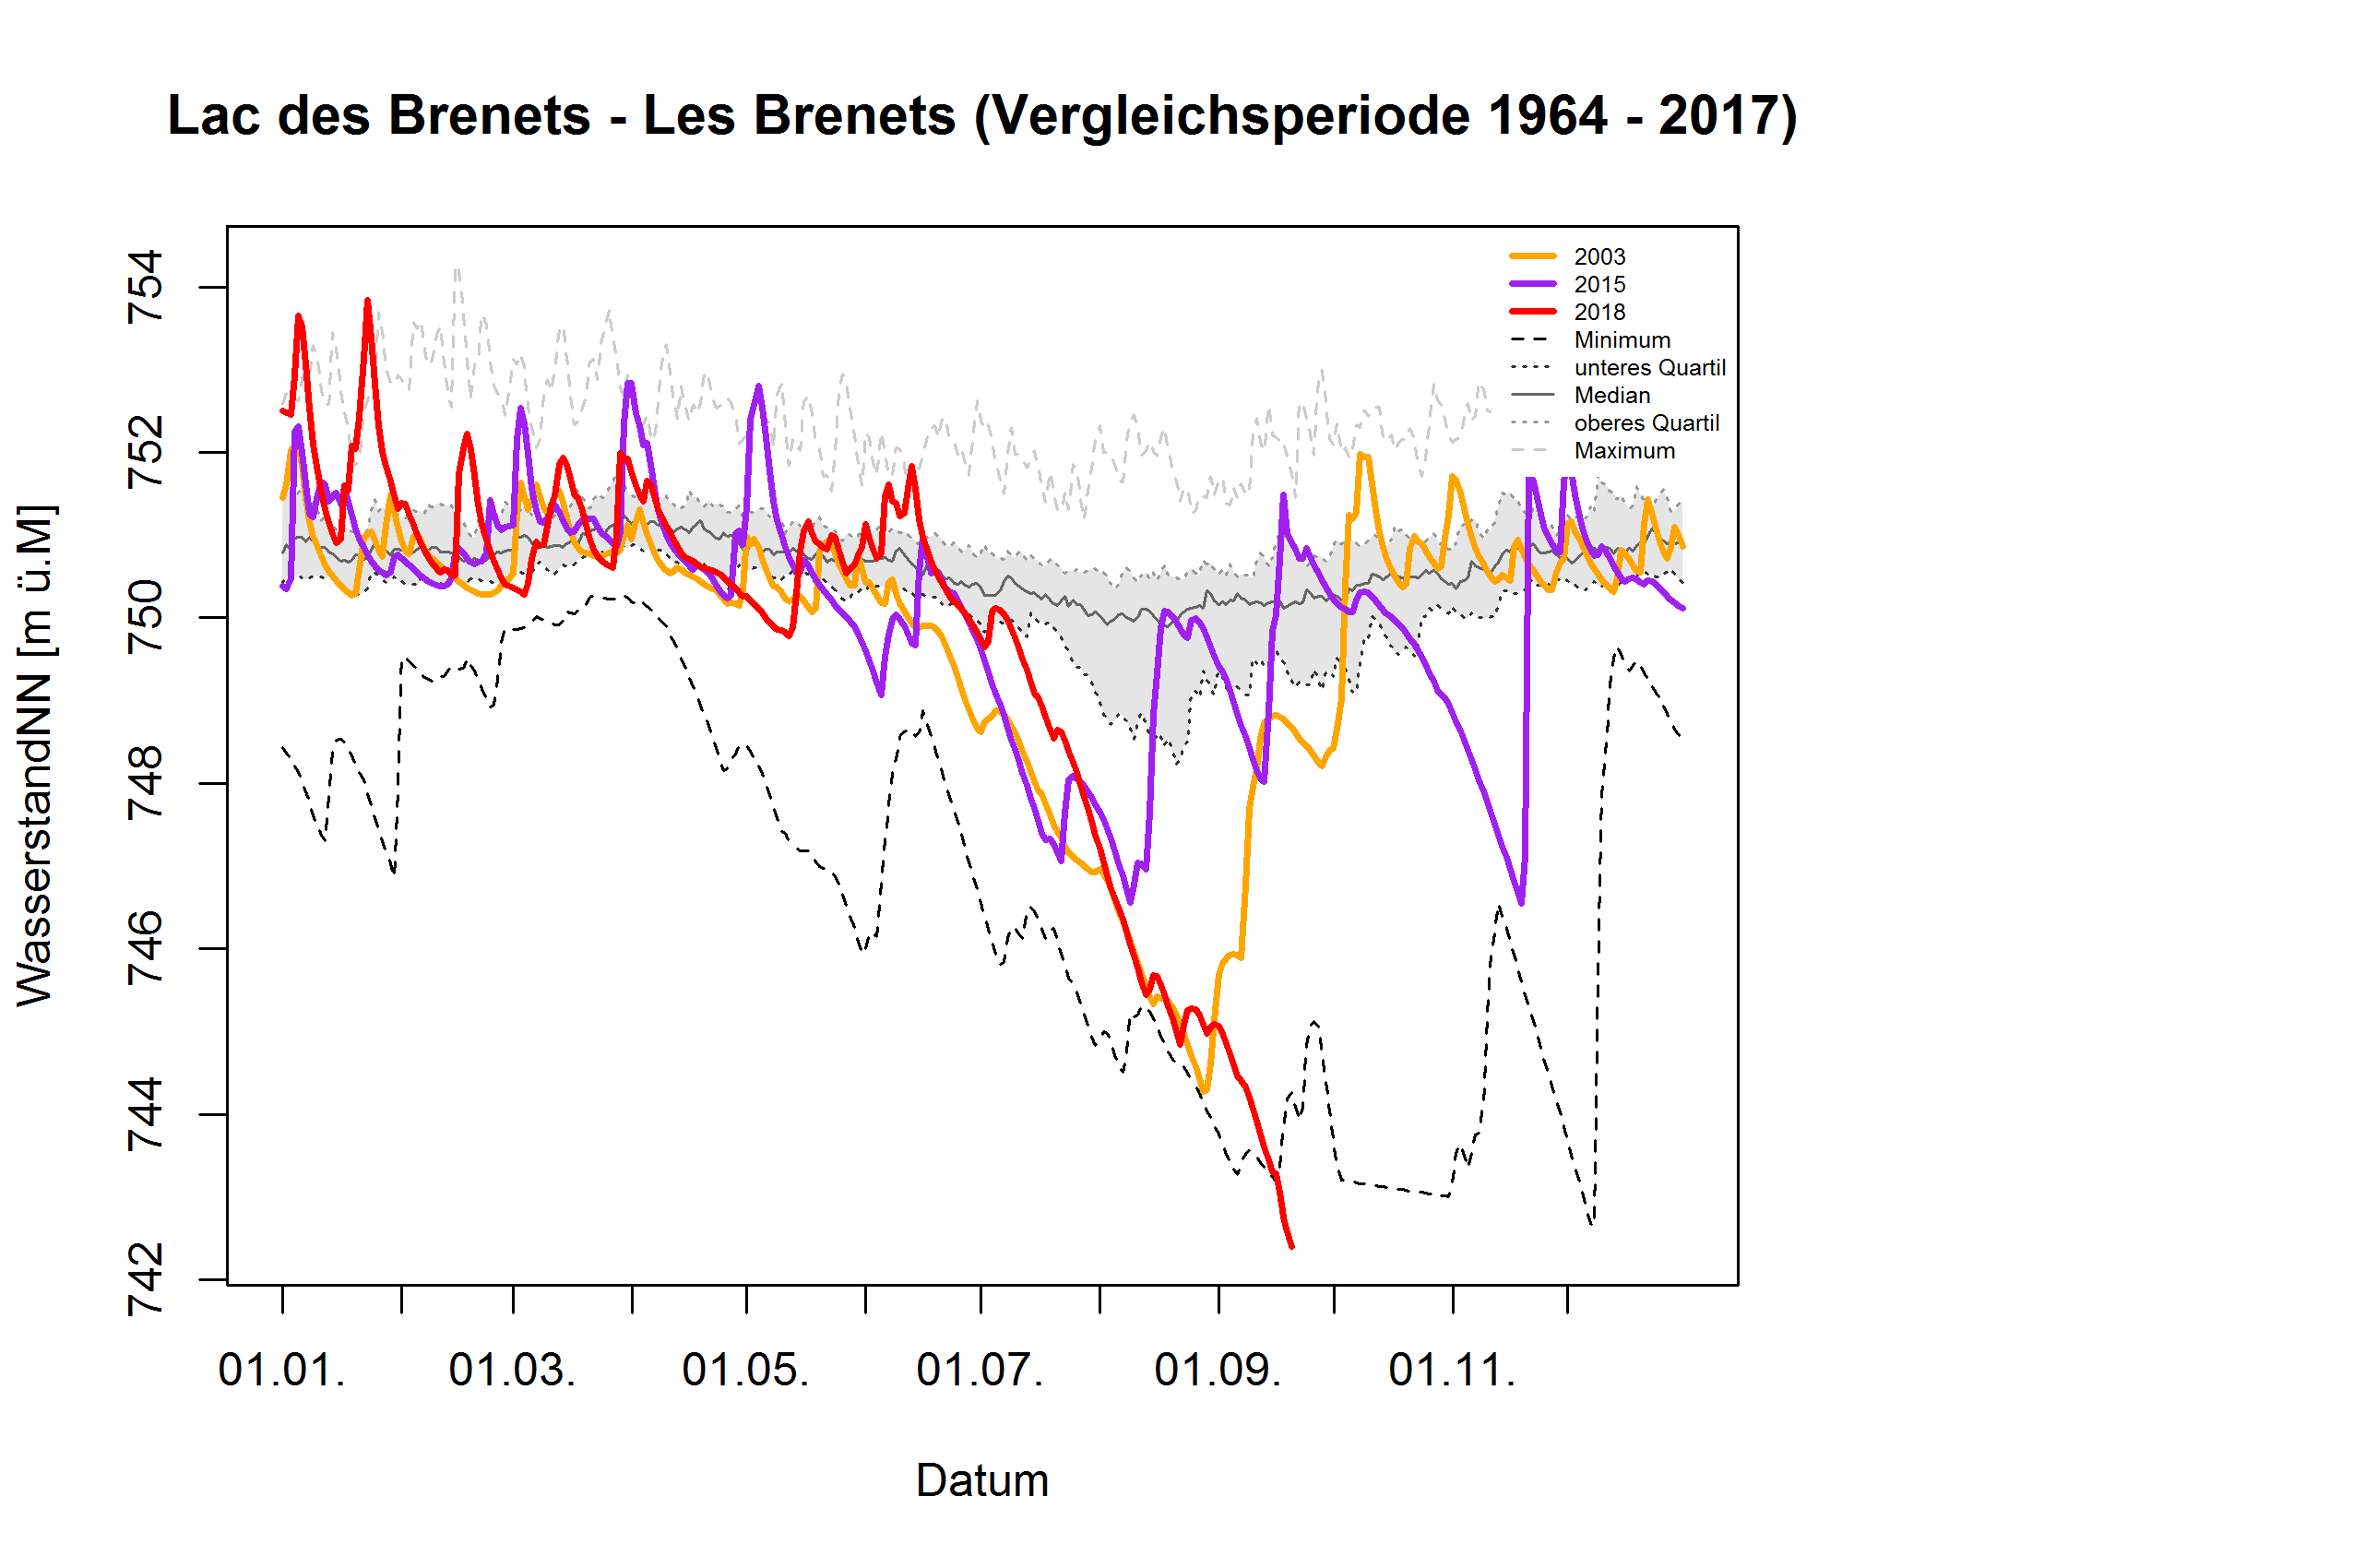 Lac des Brenets - Les Brenets: Vergleichsperiode 1964 - 2017